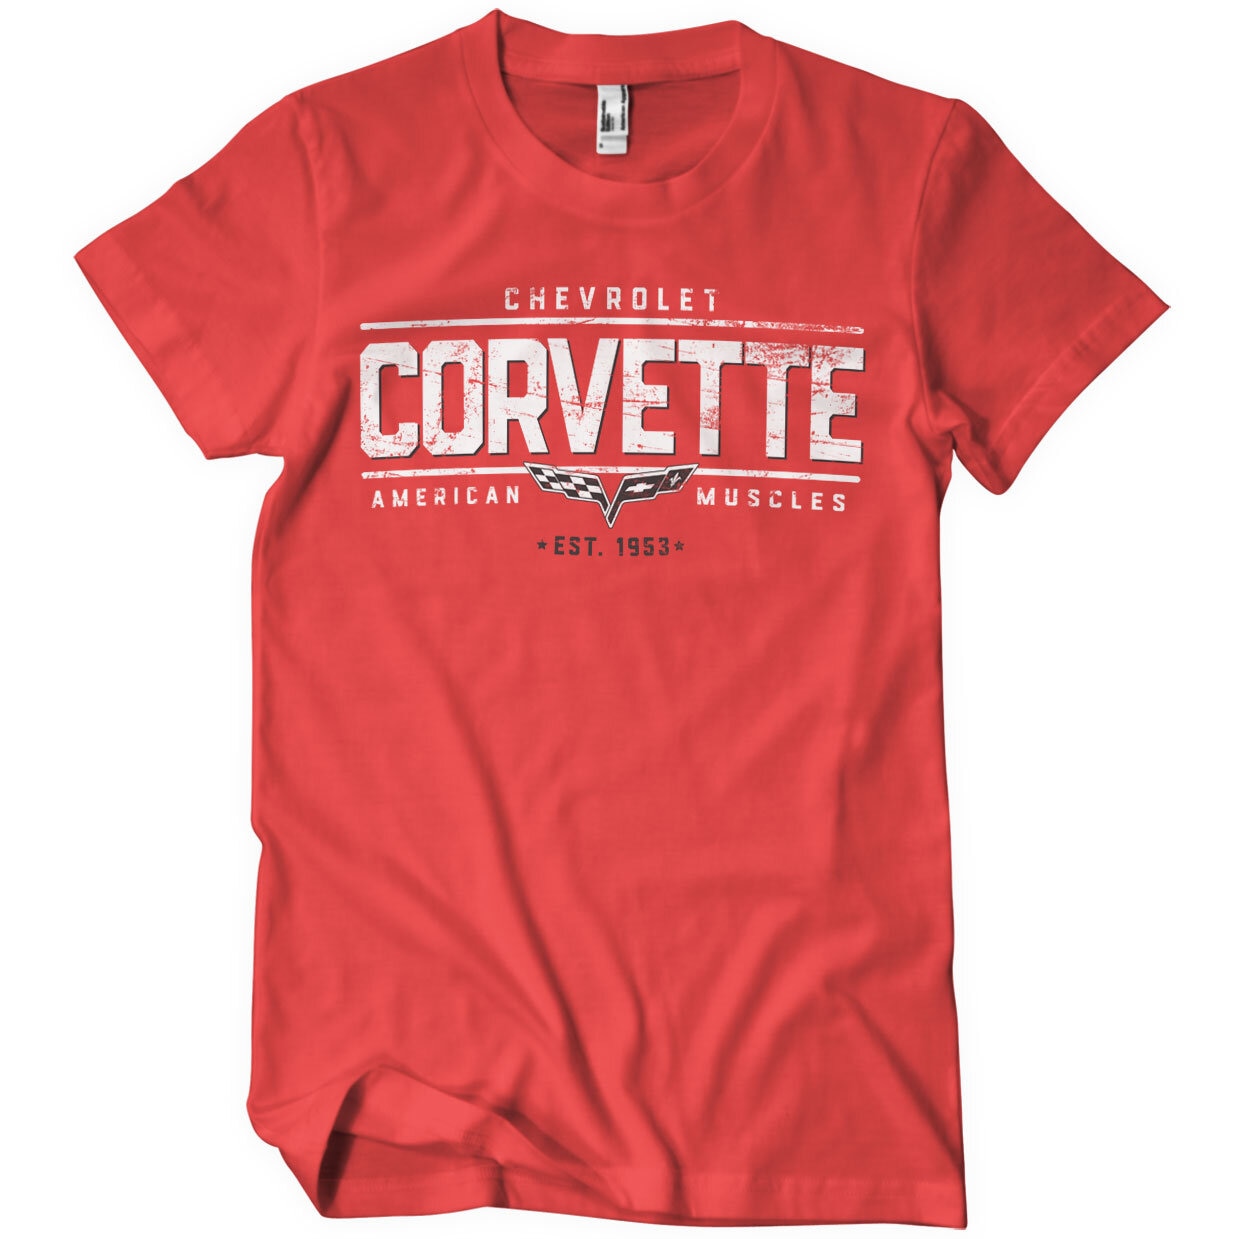 Corvette - American Muscles T-Shirt